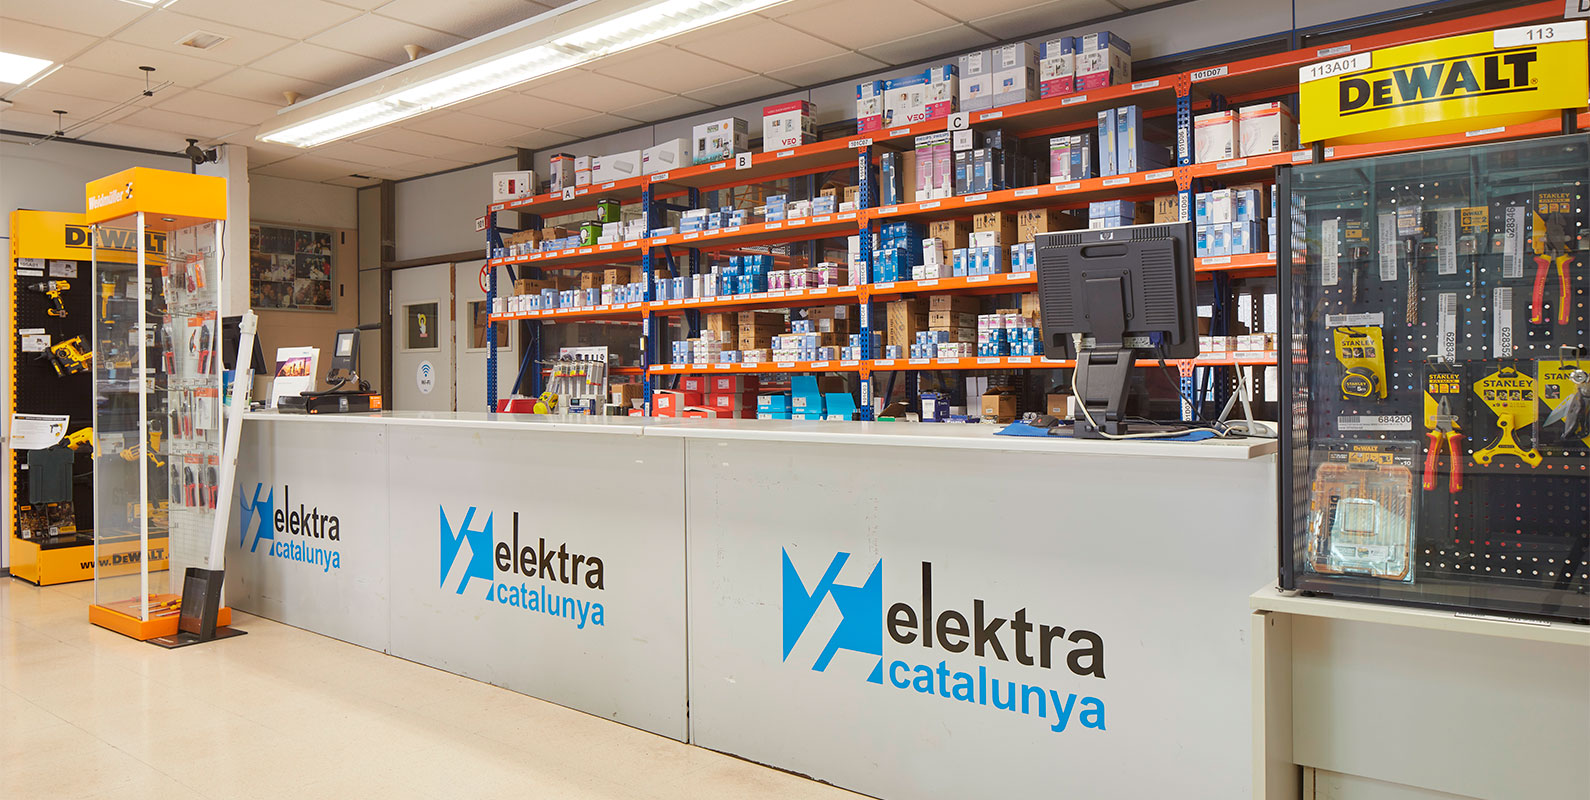 Elektra Catalunya VILAFRANCA DEL PENEDÈS - Store - Grupo Elektra